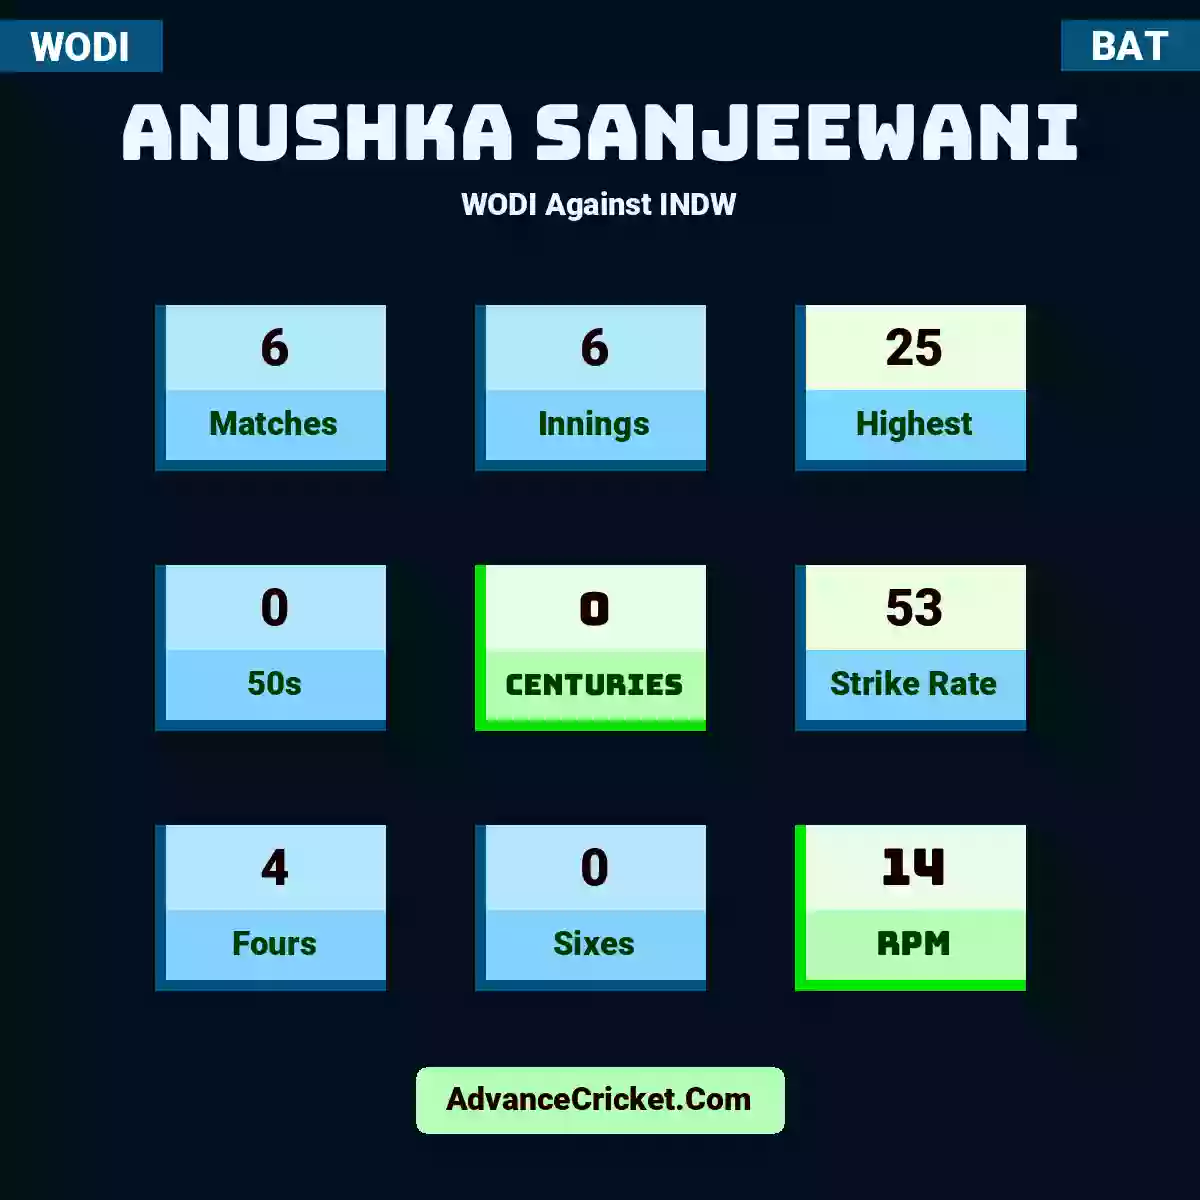 Anushka Sanjeewani WODI  Against INDW, Anushka Sanjeewani played 6 matches, scored 25 runs as highest, 0 half-centuries, and 0 centuries, with a strike rate of 53. A.Sanjeewani hit 4 fours and 0 sixes, with an RPM of 14.